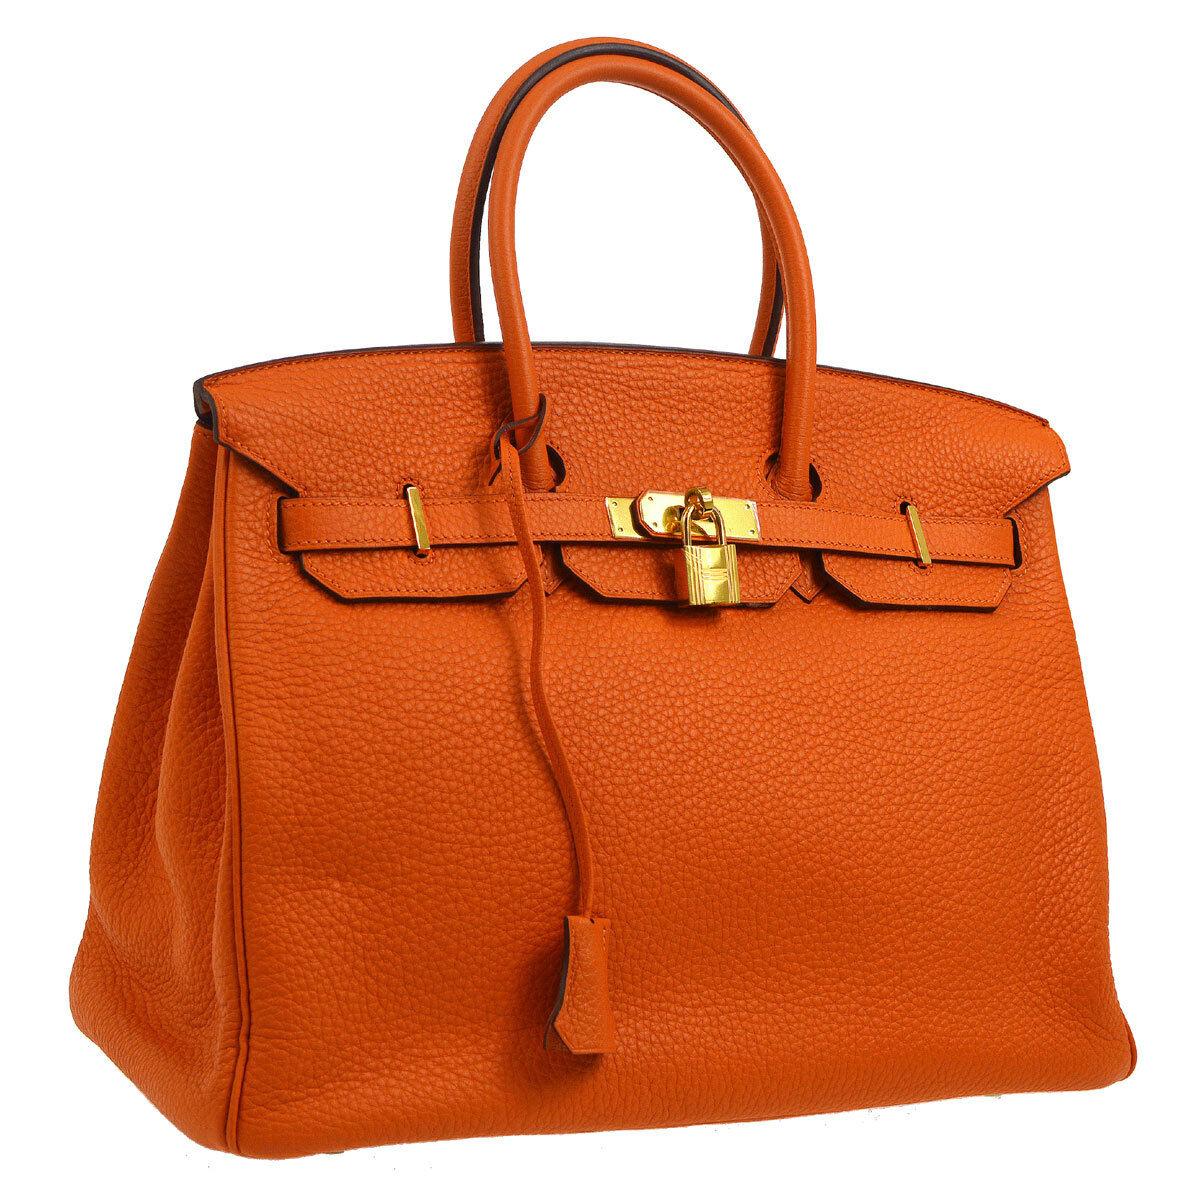 Hermes Birkin 35 Orange Leather Gold Top Handle Satchel Travel Tote Bag in Box 1